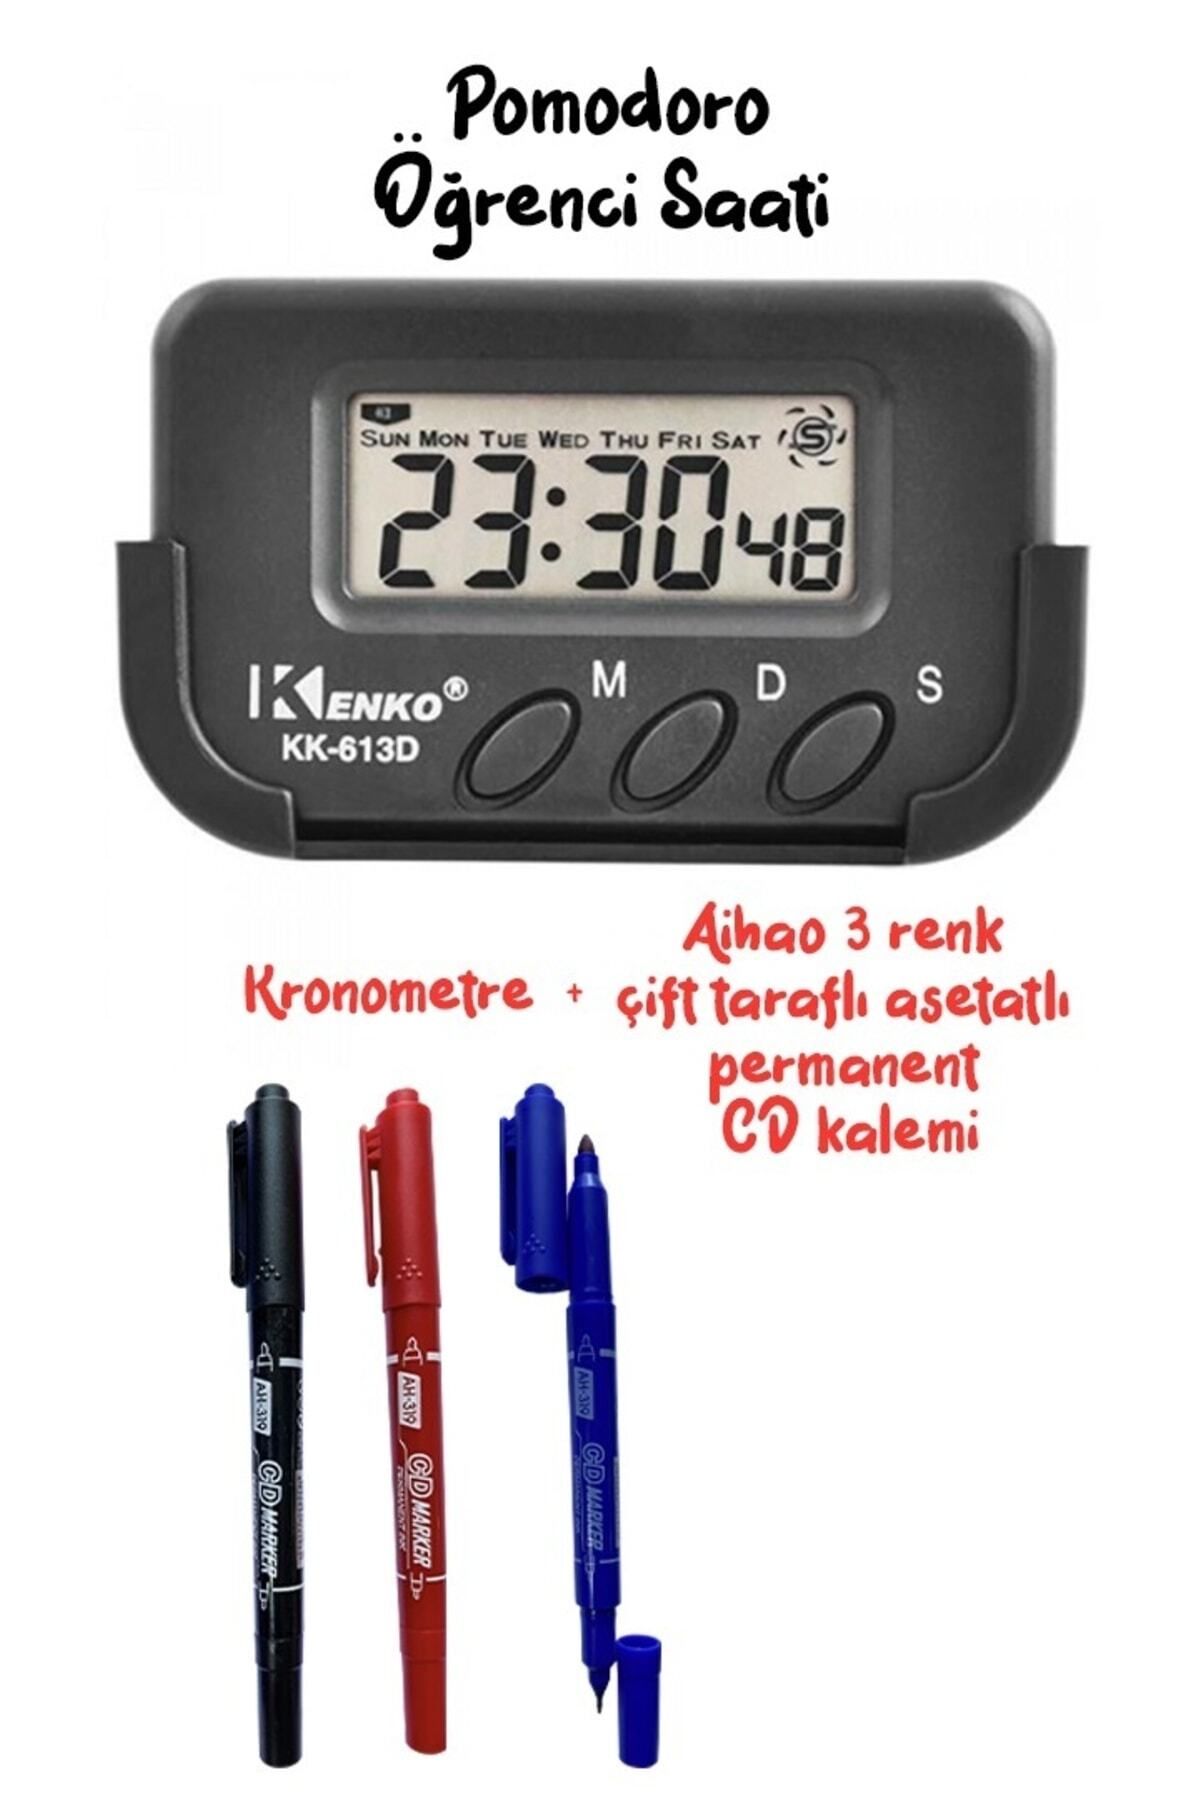 Kenko Pomodoro Öğrenci Saati Kronometreli Ders Çalışma Masa Saati+aihao 3 Renk Çift Taraflı Asetatlı Kalem